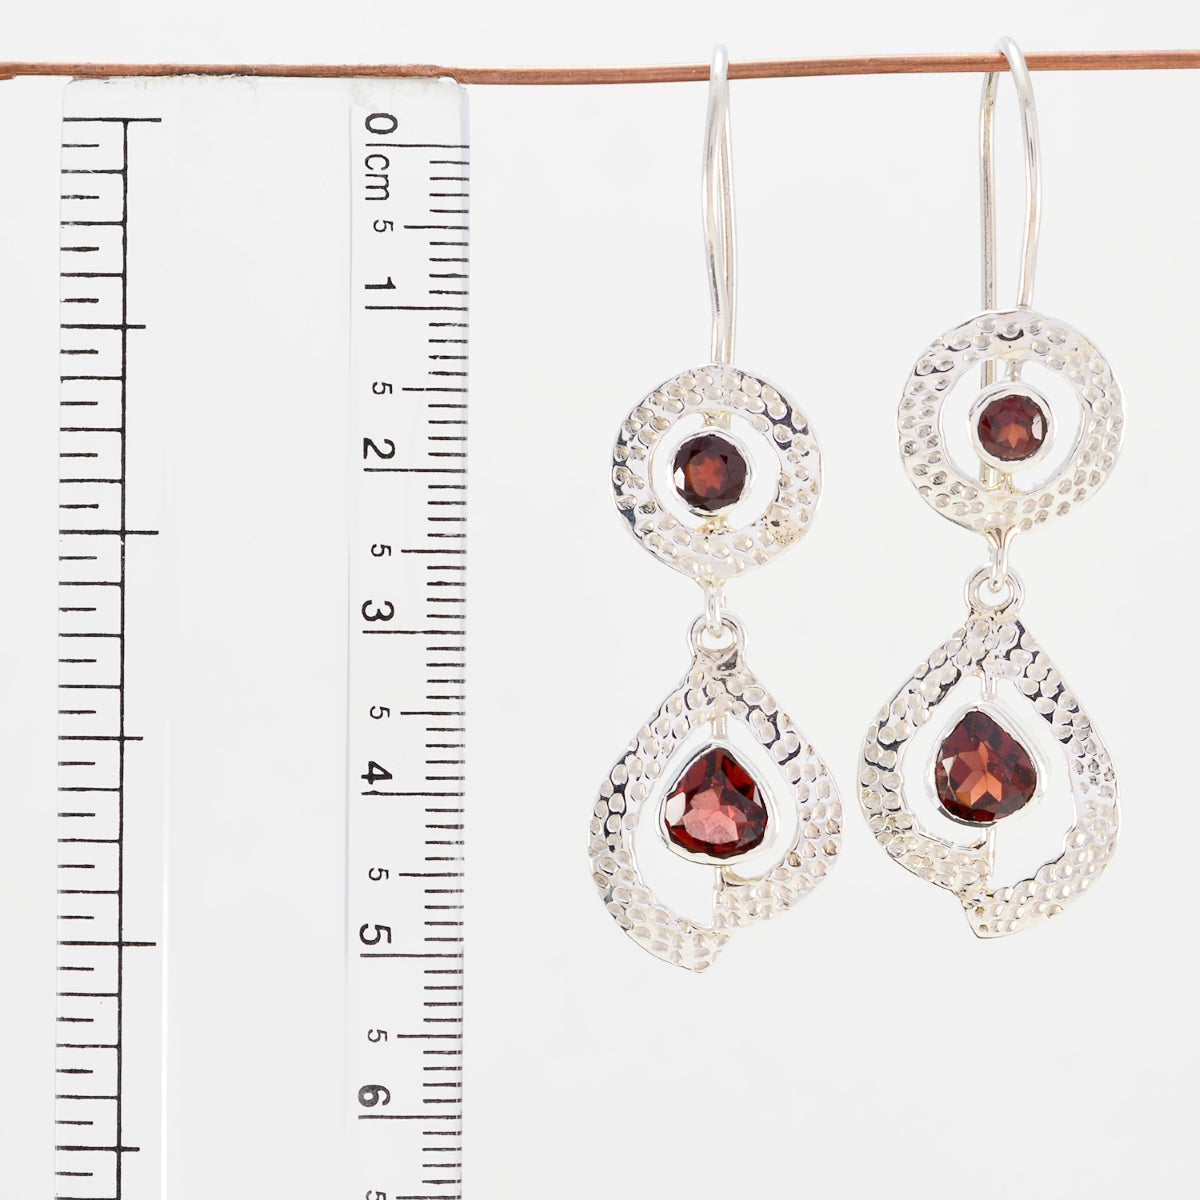 Riyo Good Gemstones multi shape Faceted Red Garnet Silver Earrings cyber Monday gift